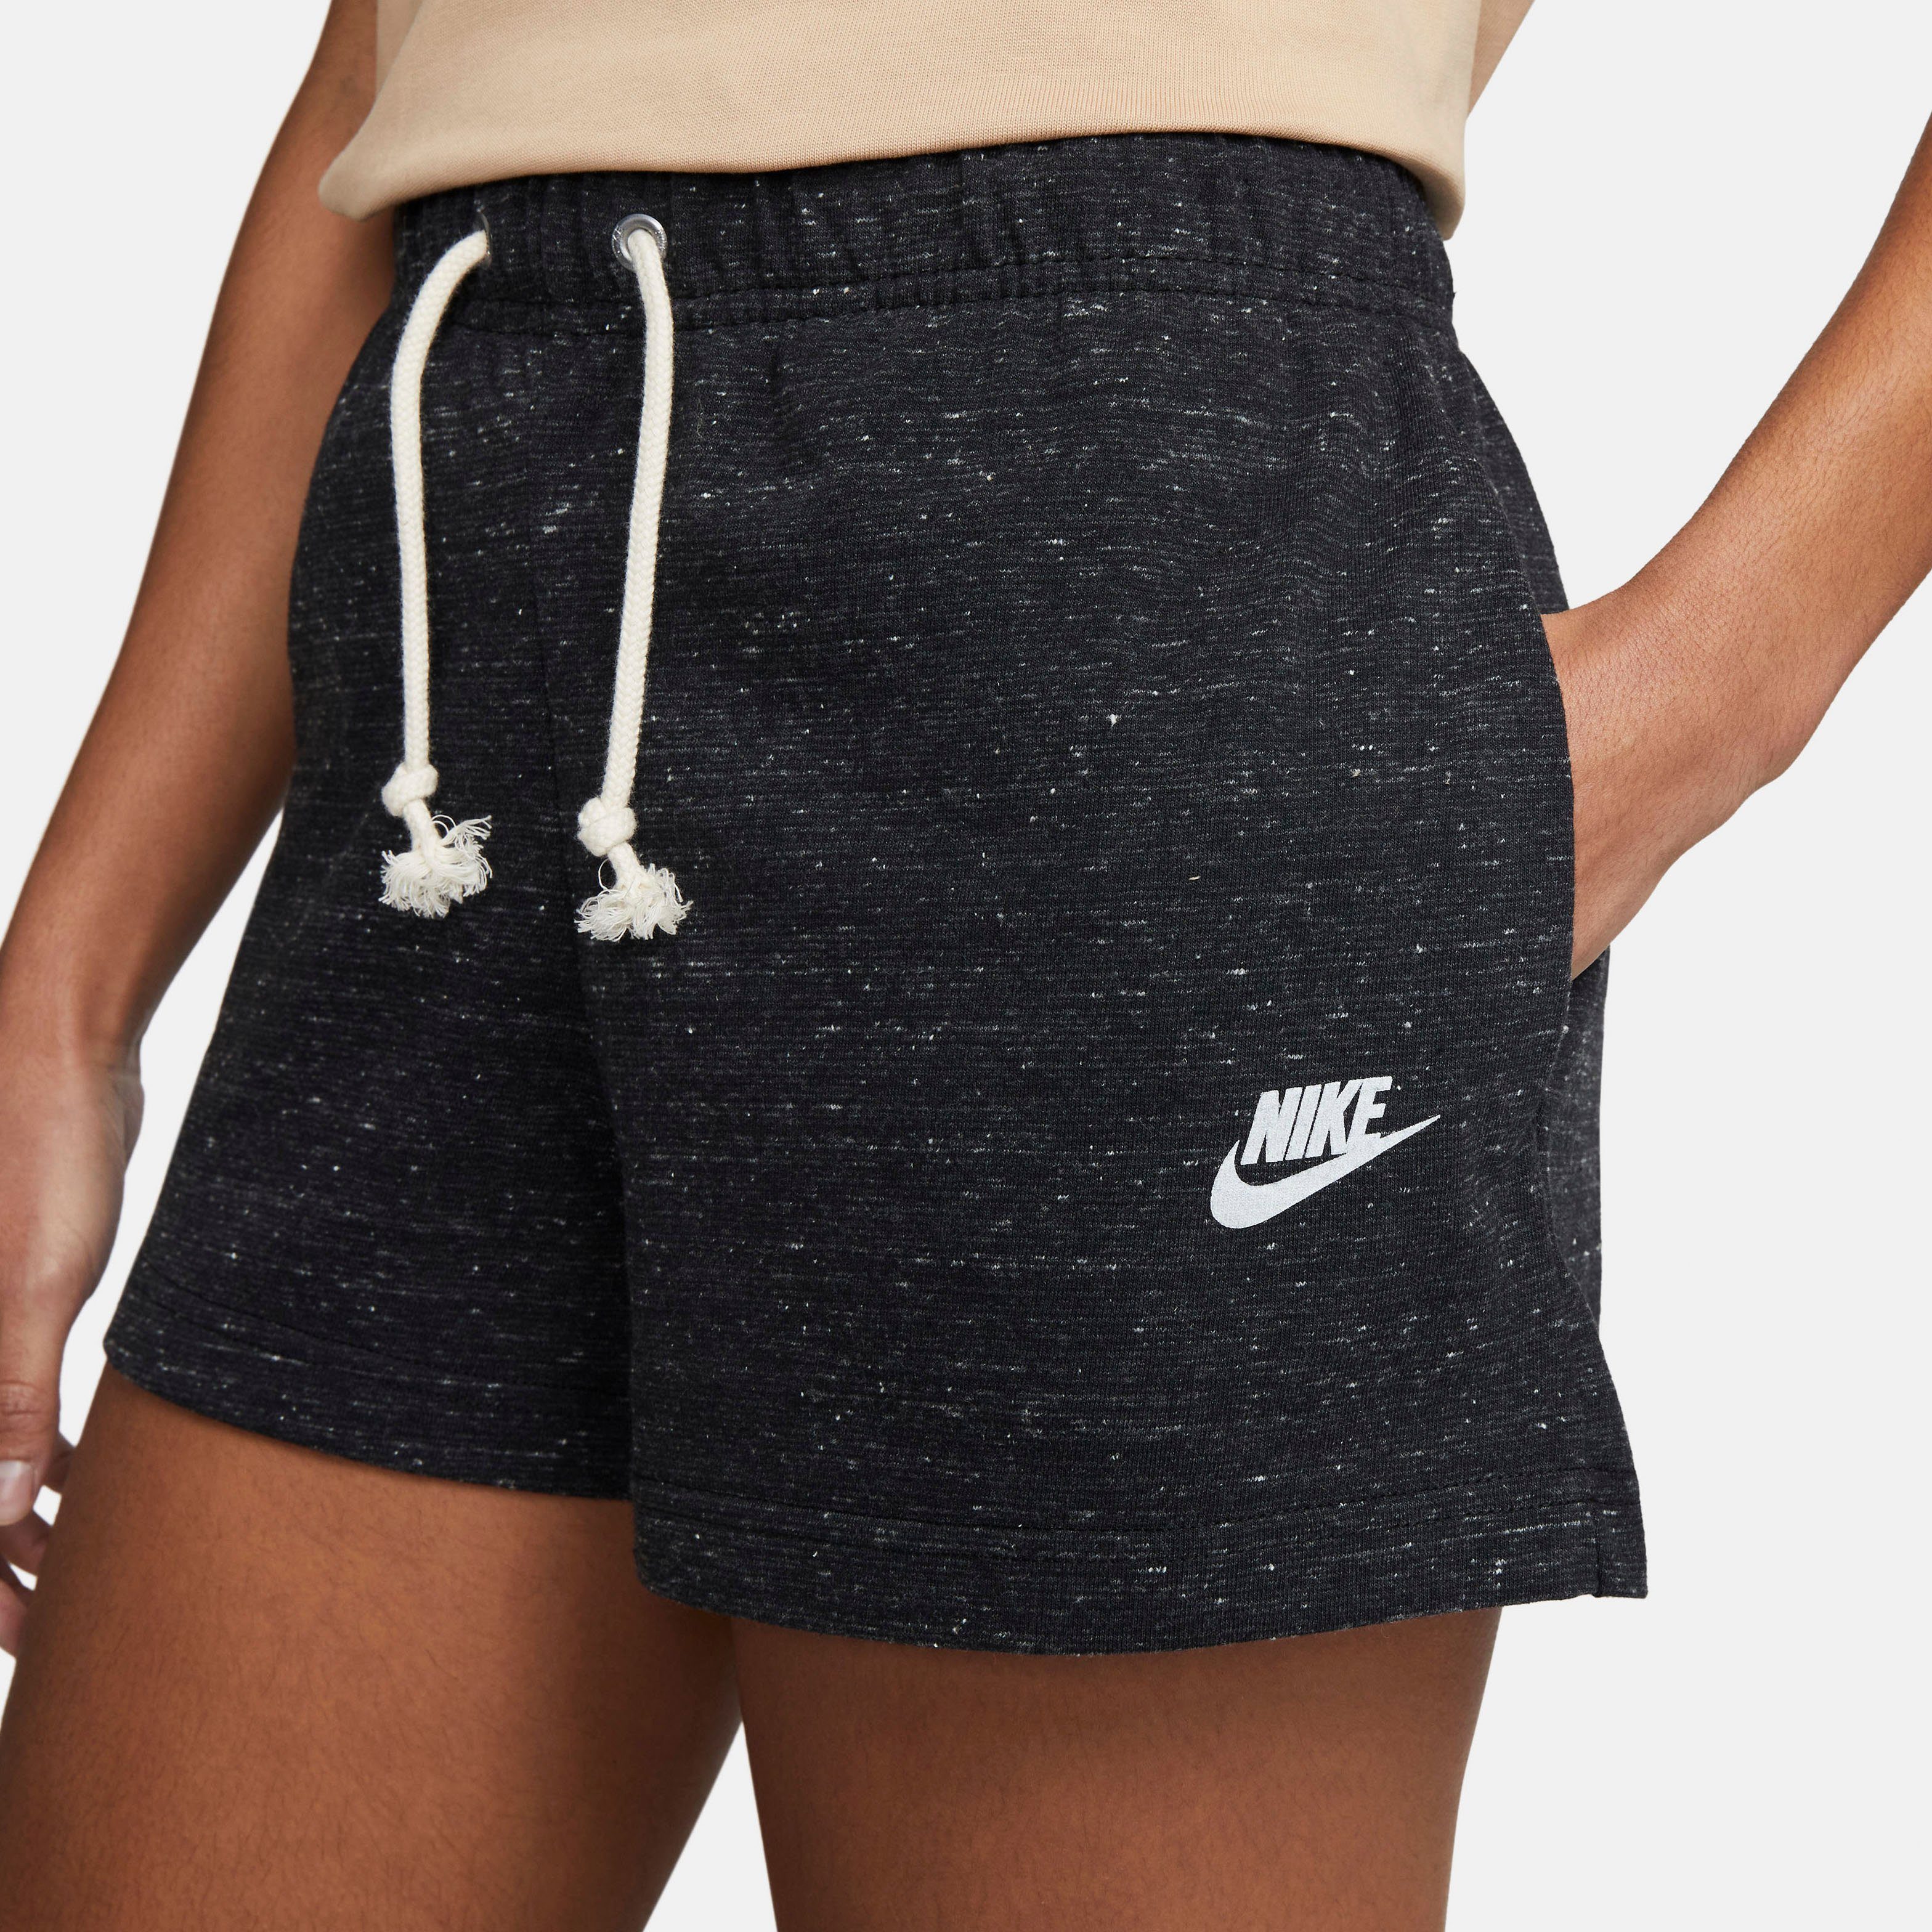 Women's Nike Shorts Gym Sportswear Shorts BLACK/WHITE Vintage